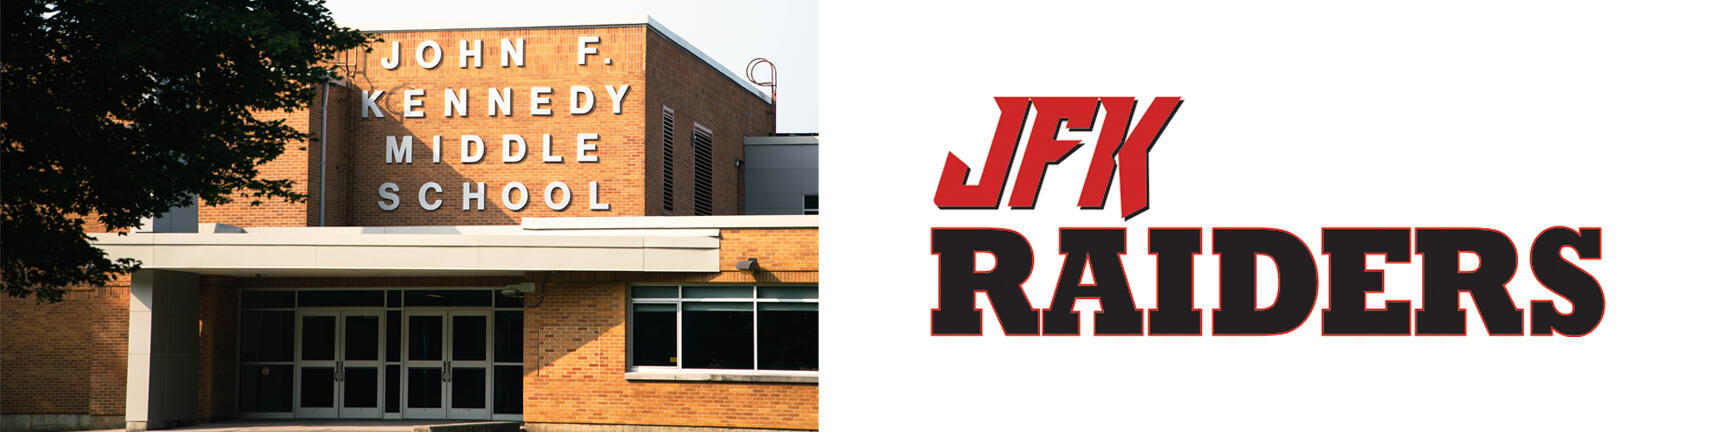 Slika zgrade JFK škole i logotipa JFK Raiders